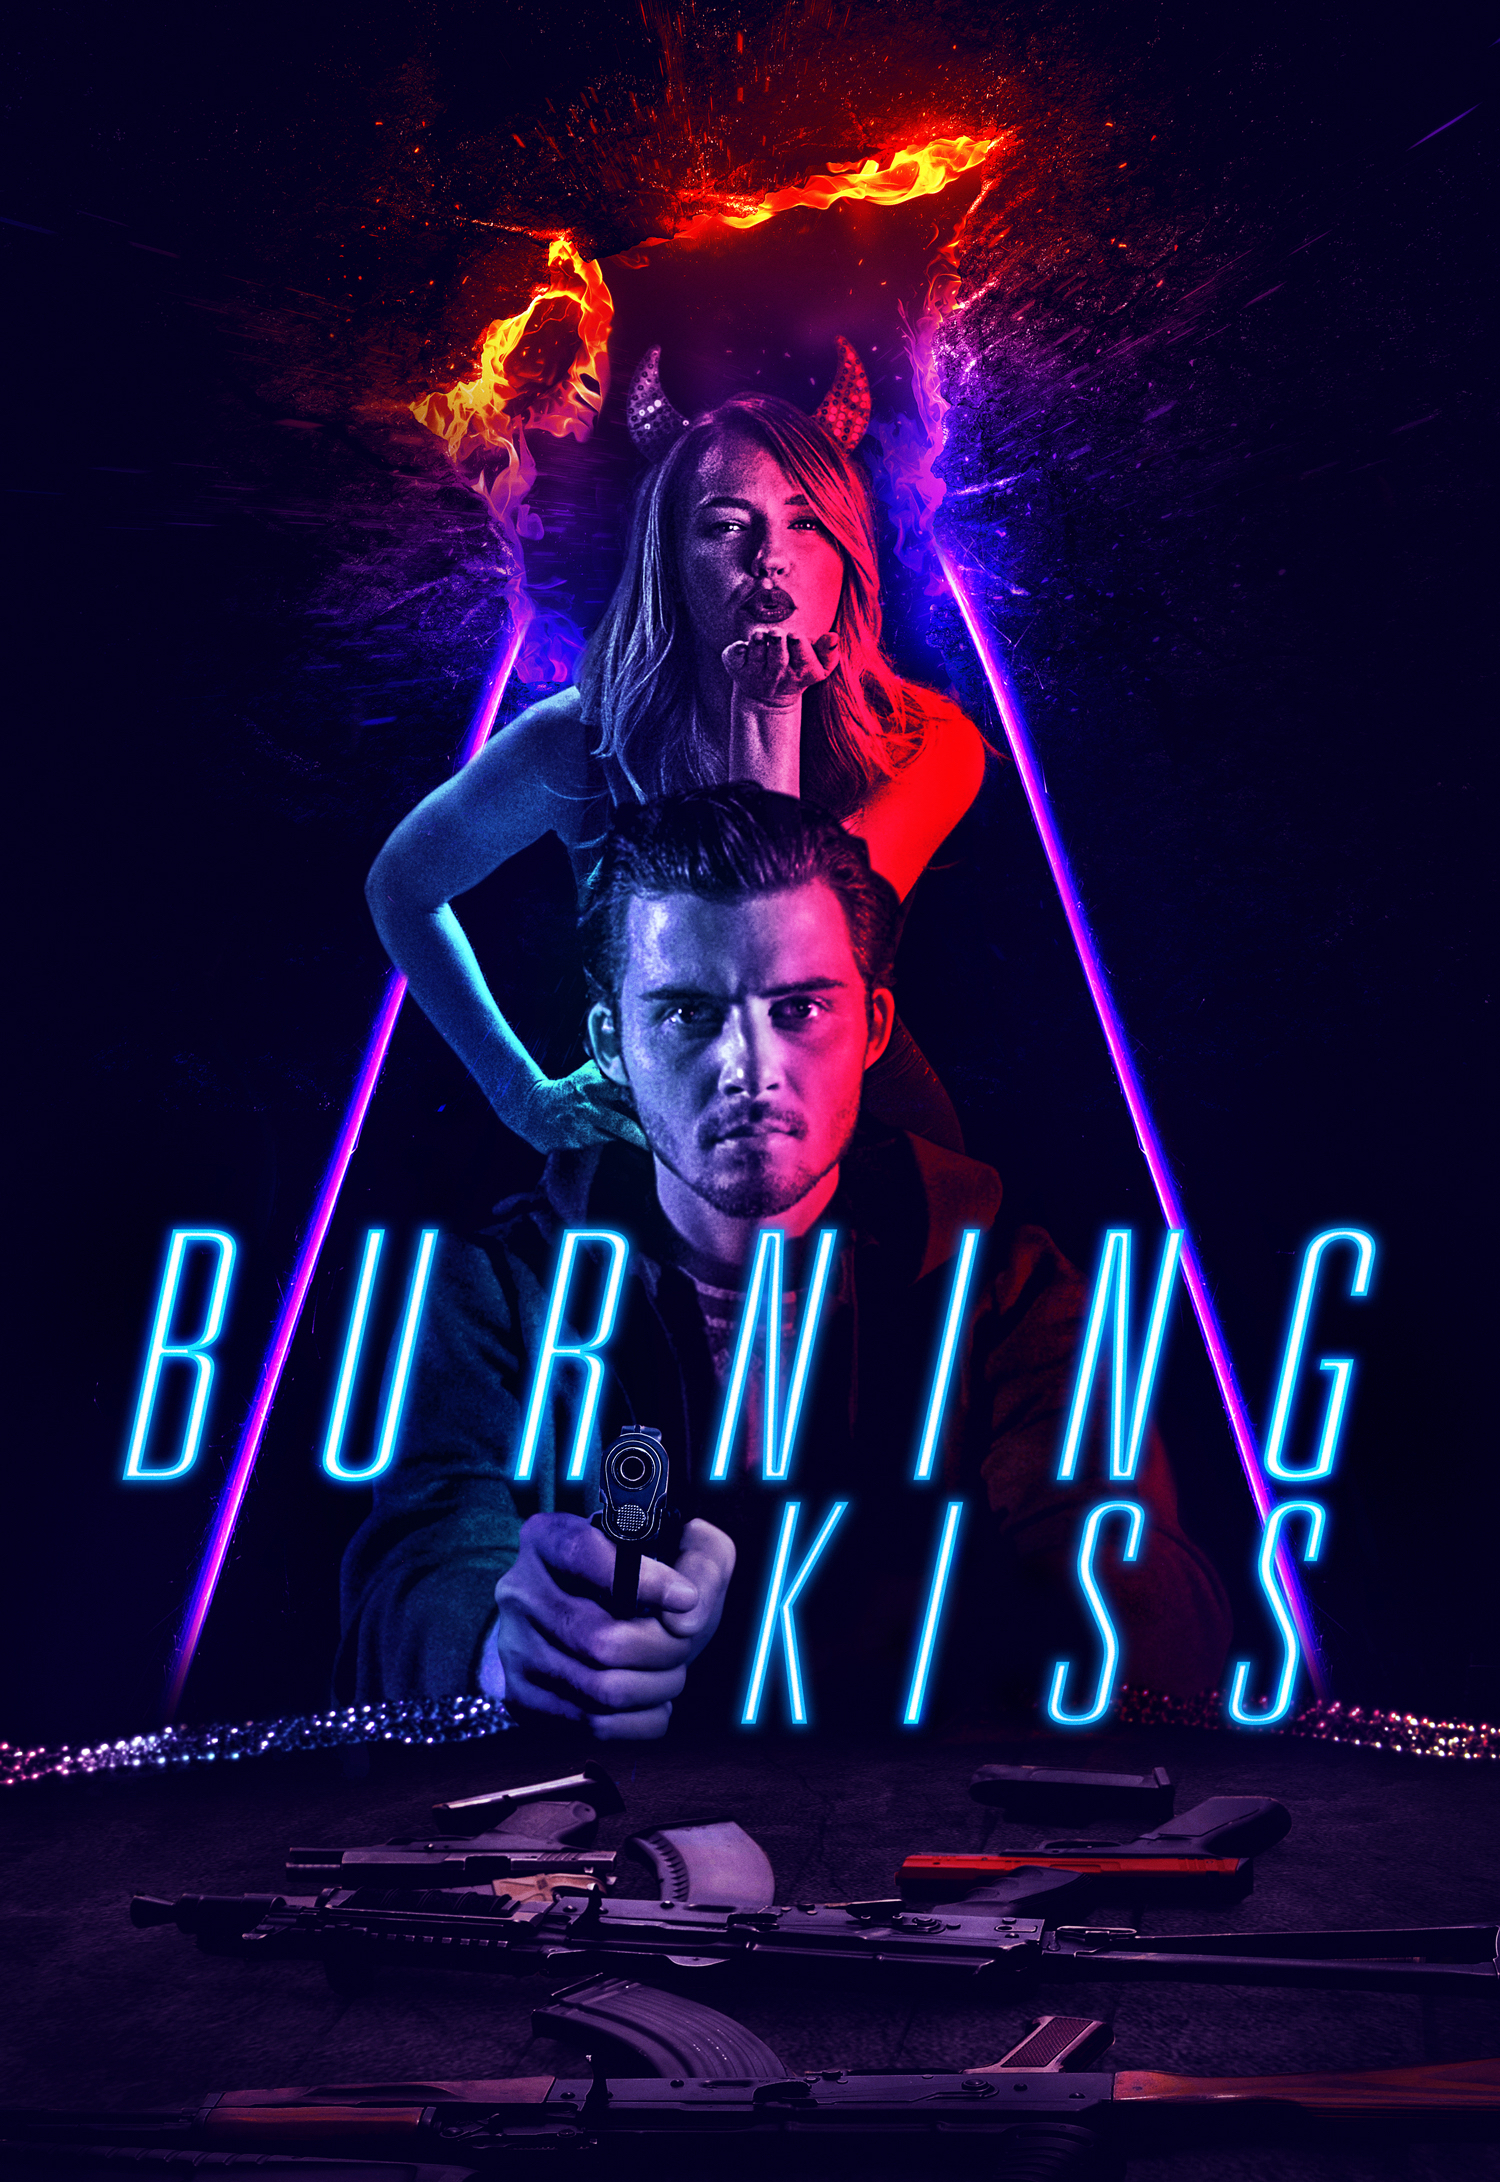 Nonton film Burning Kiss layarkaca21 indoxx1 ganool online streaming terbaru